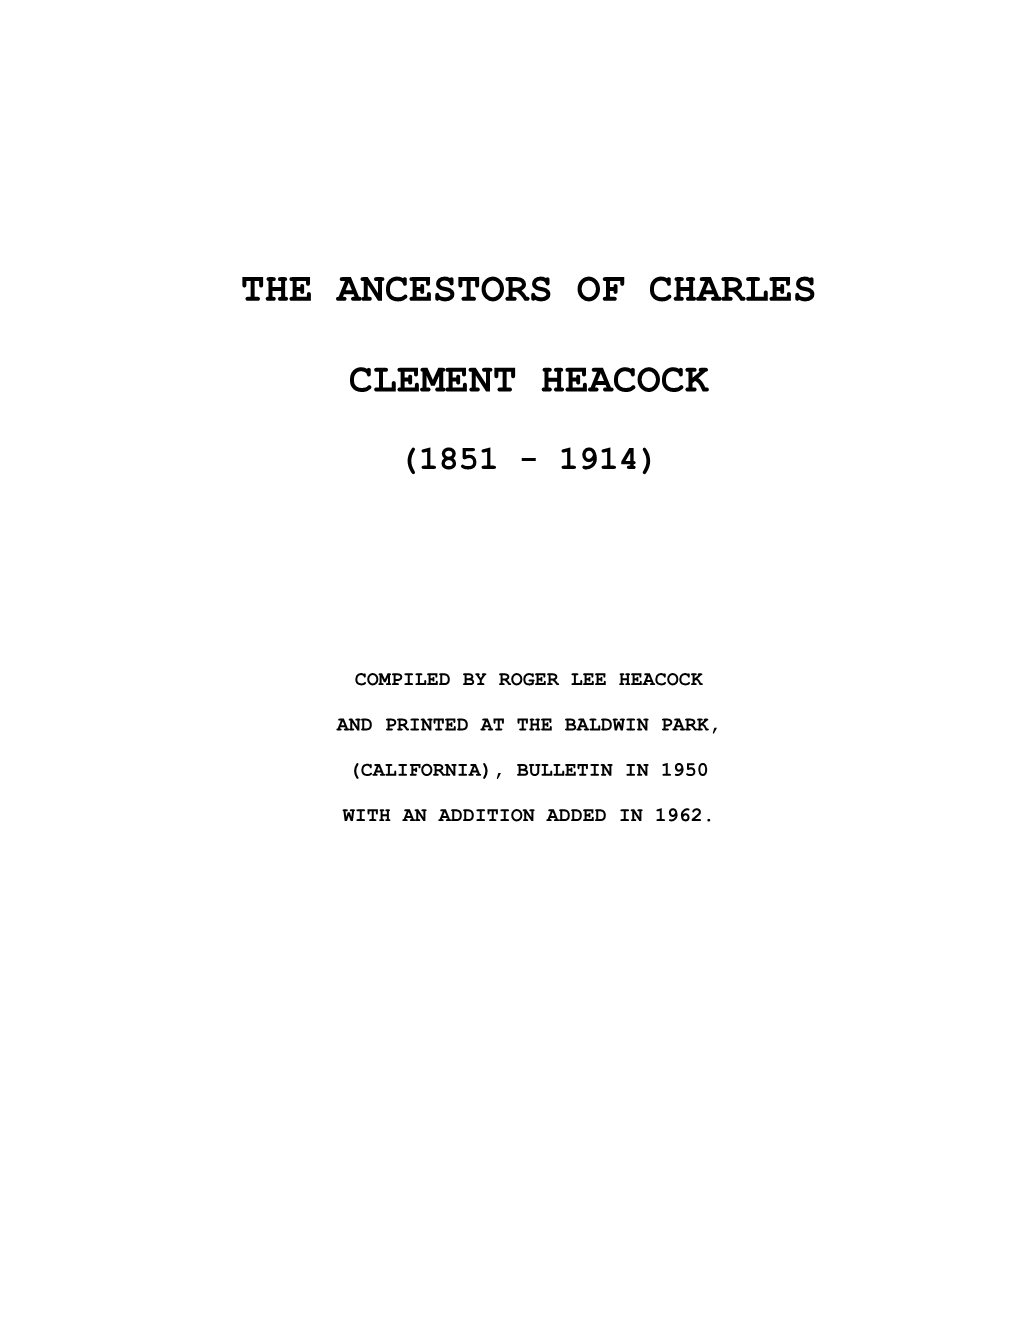 The Ancestors of Charles